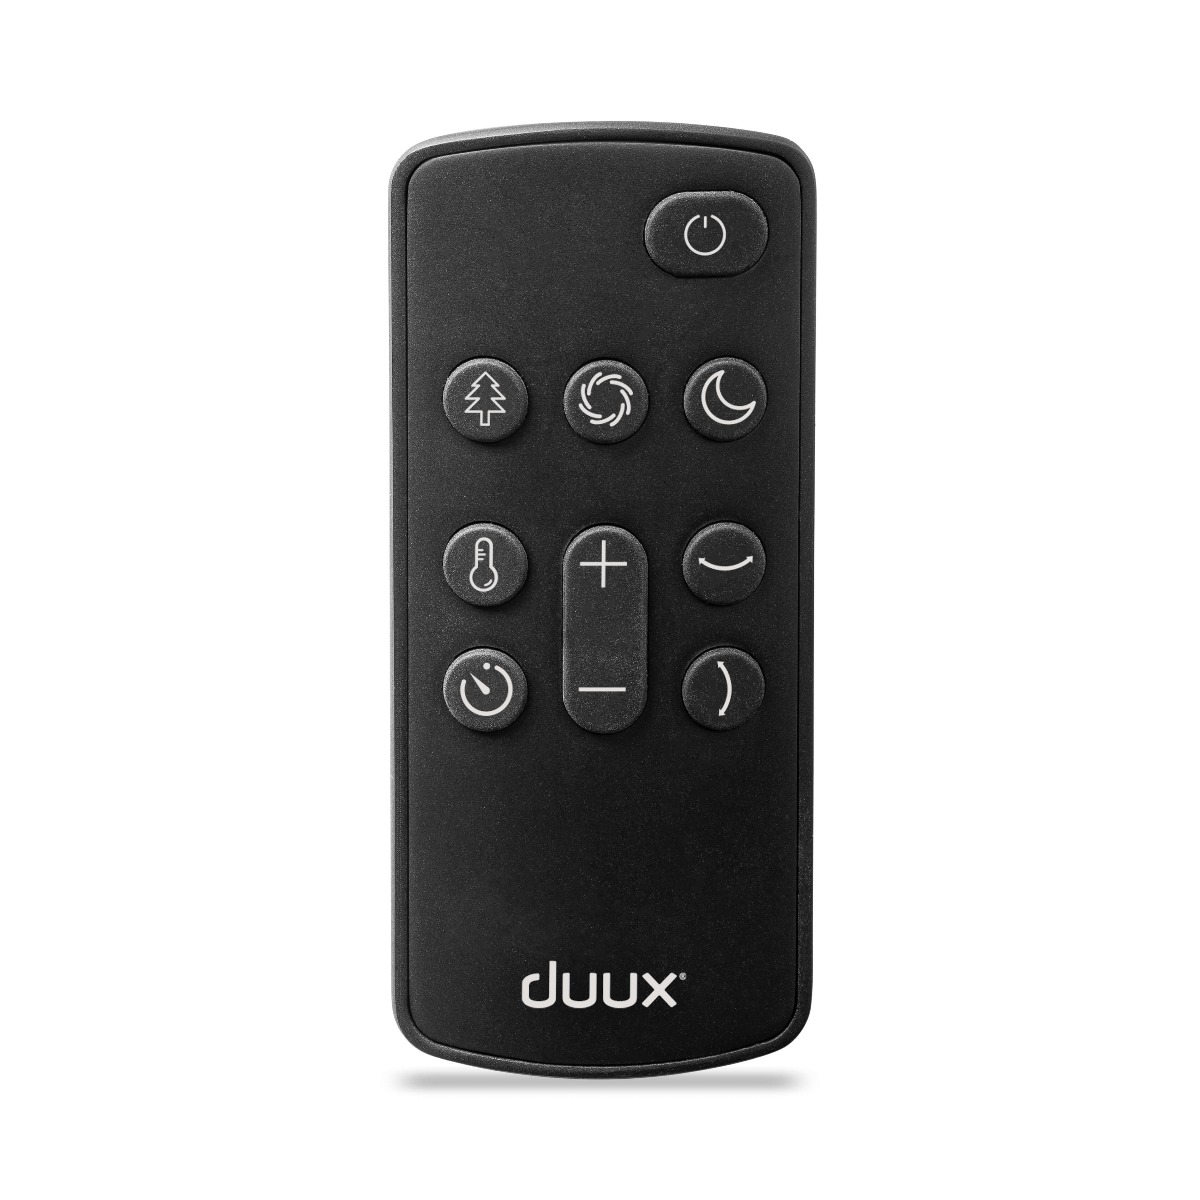 Duux DXCF14 Whisper Flex Ultimate Remote